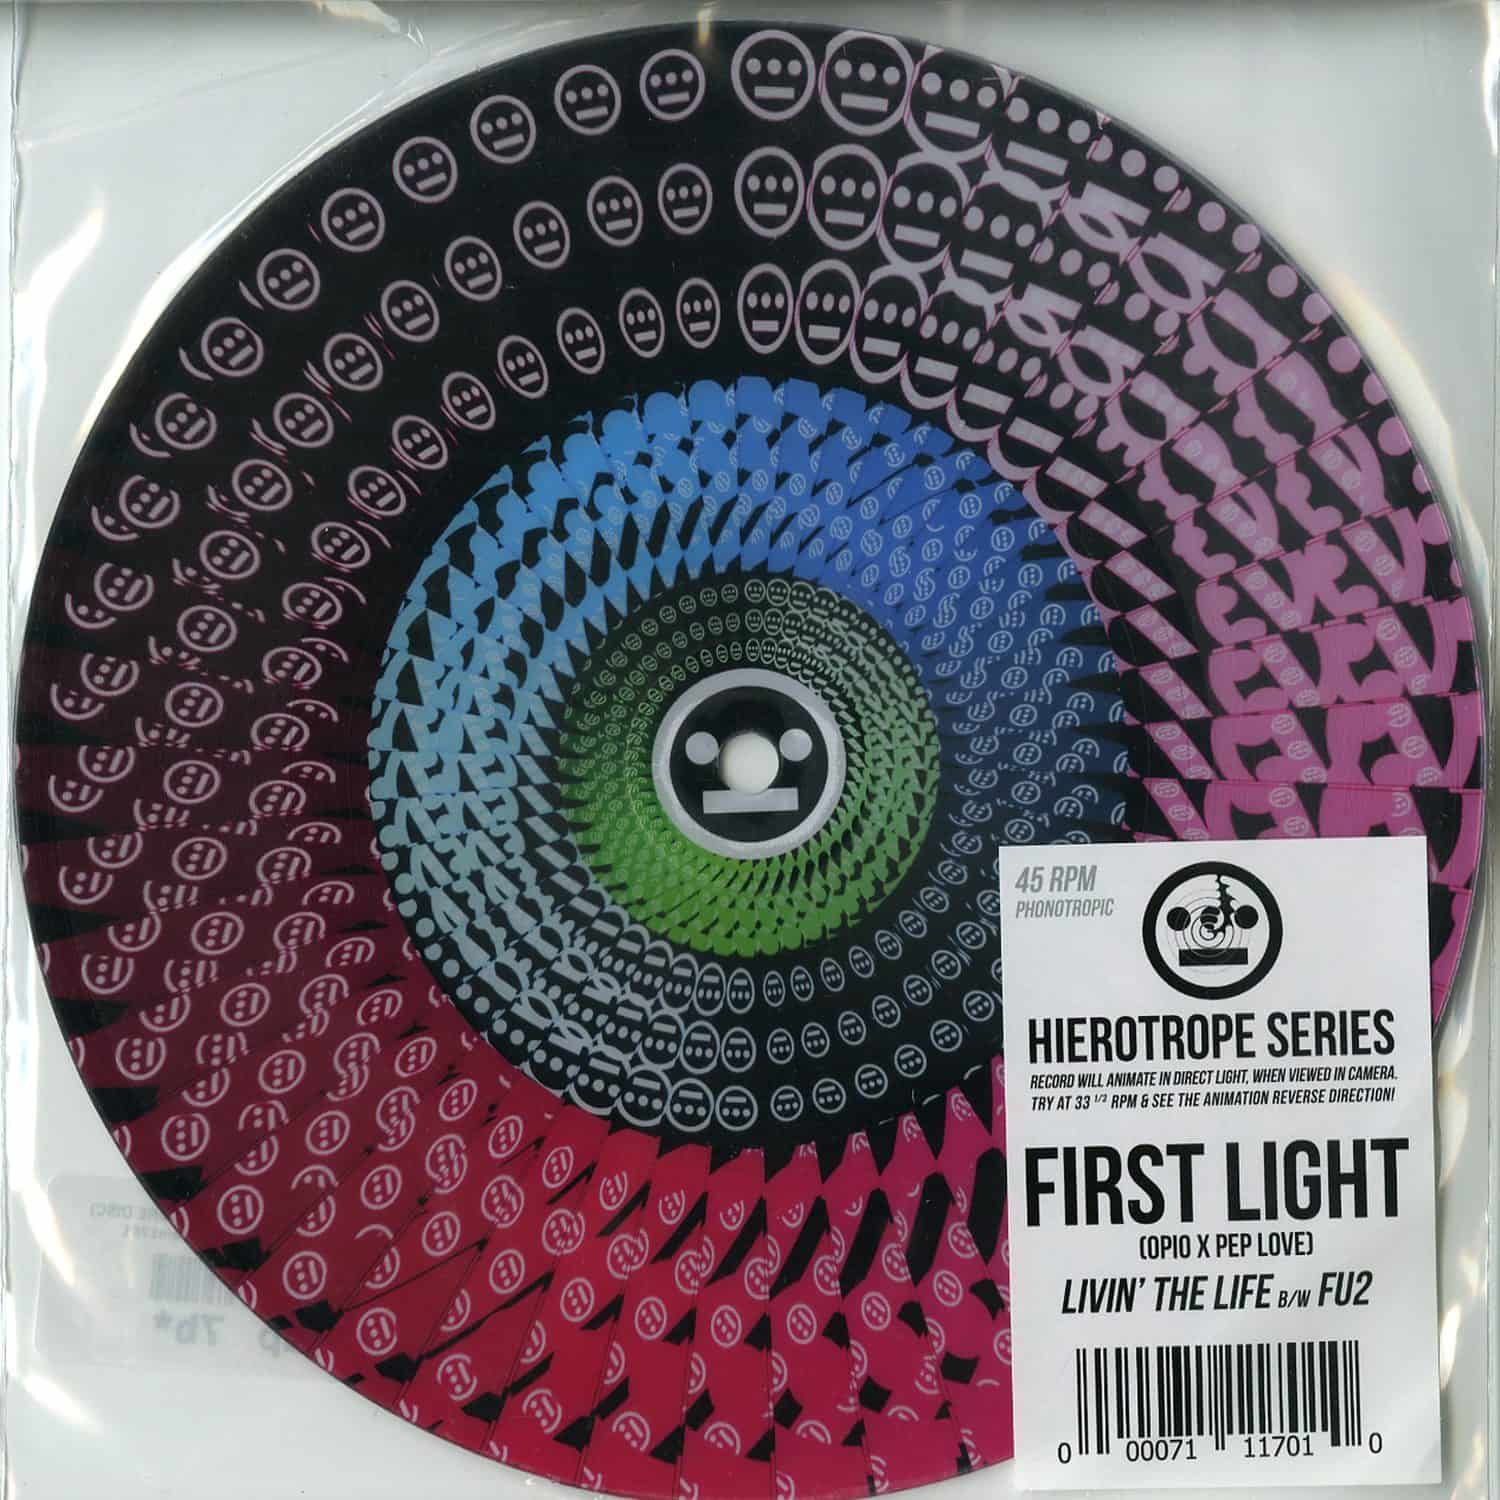 First Light - LIVIN THE LIFE / FU2 